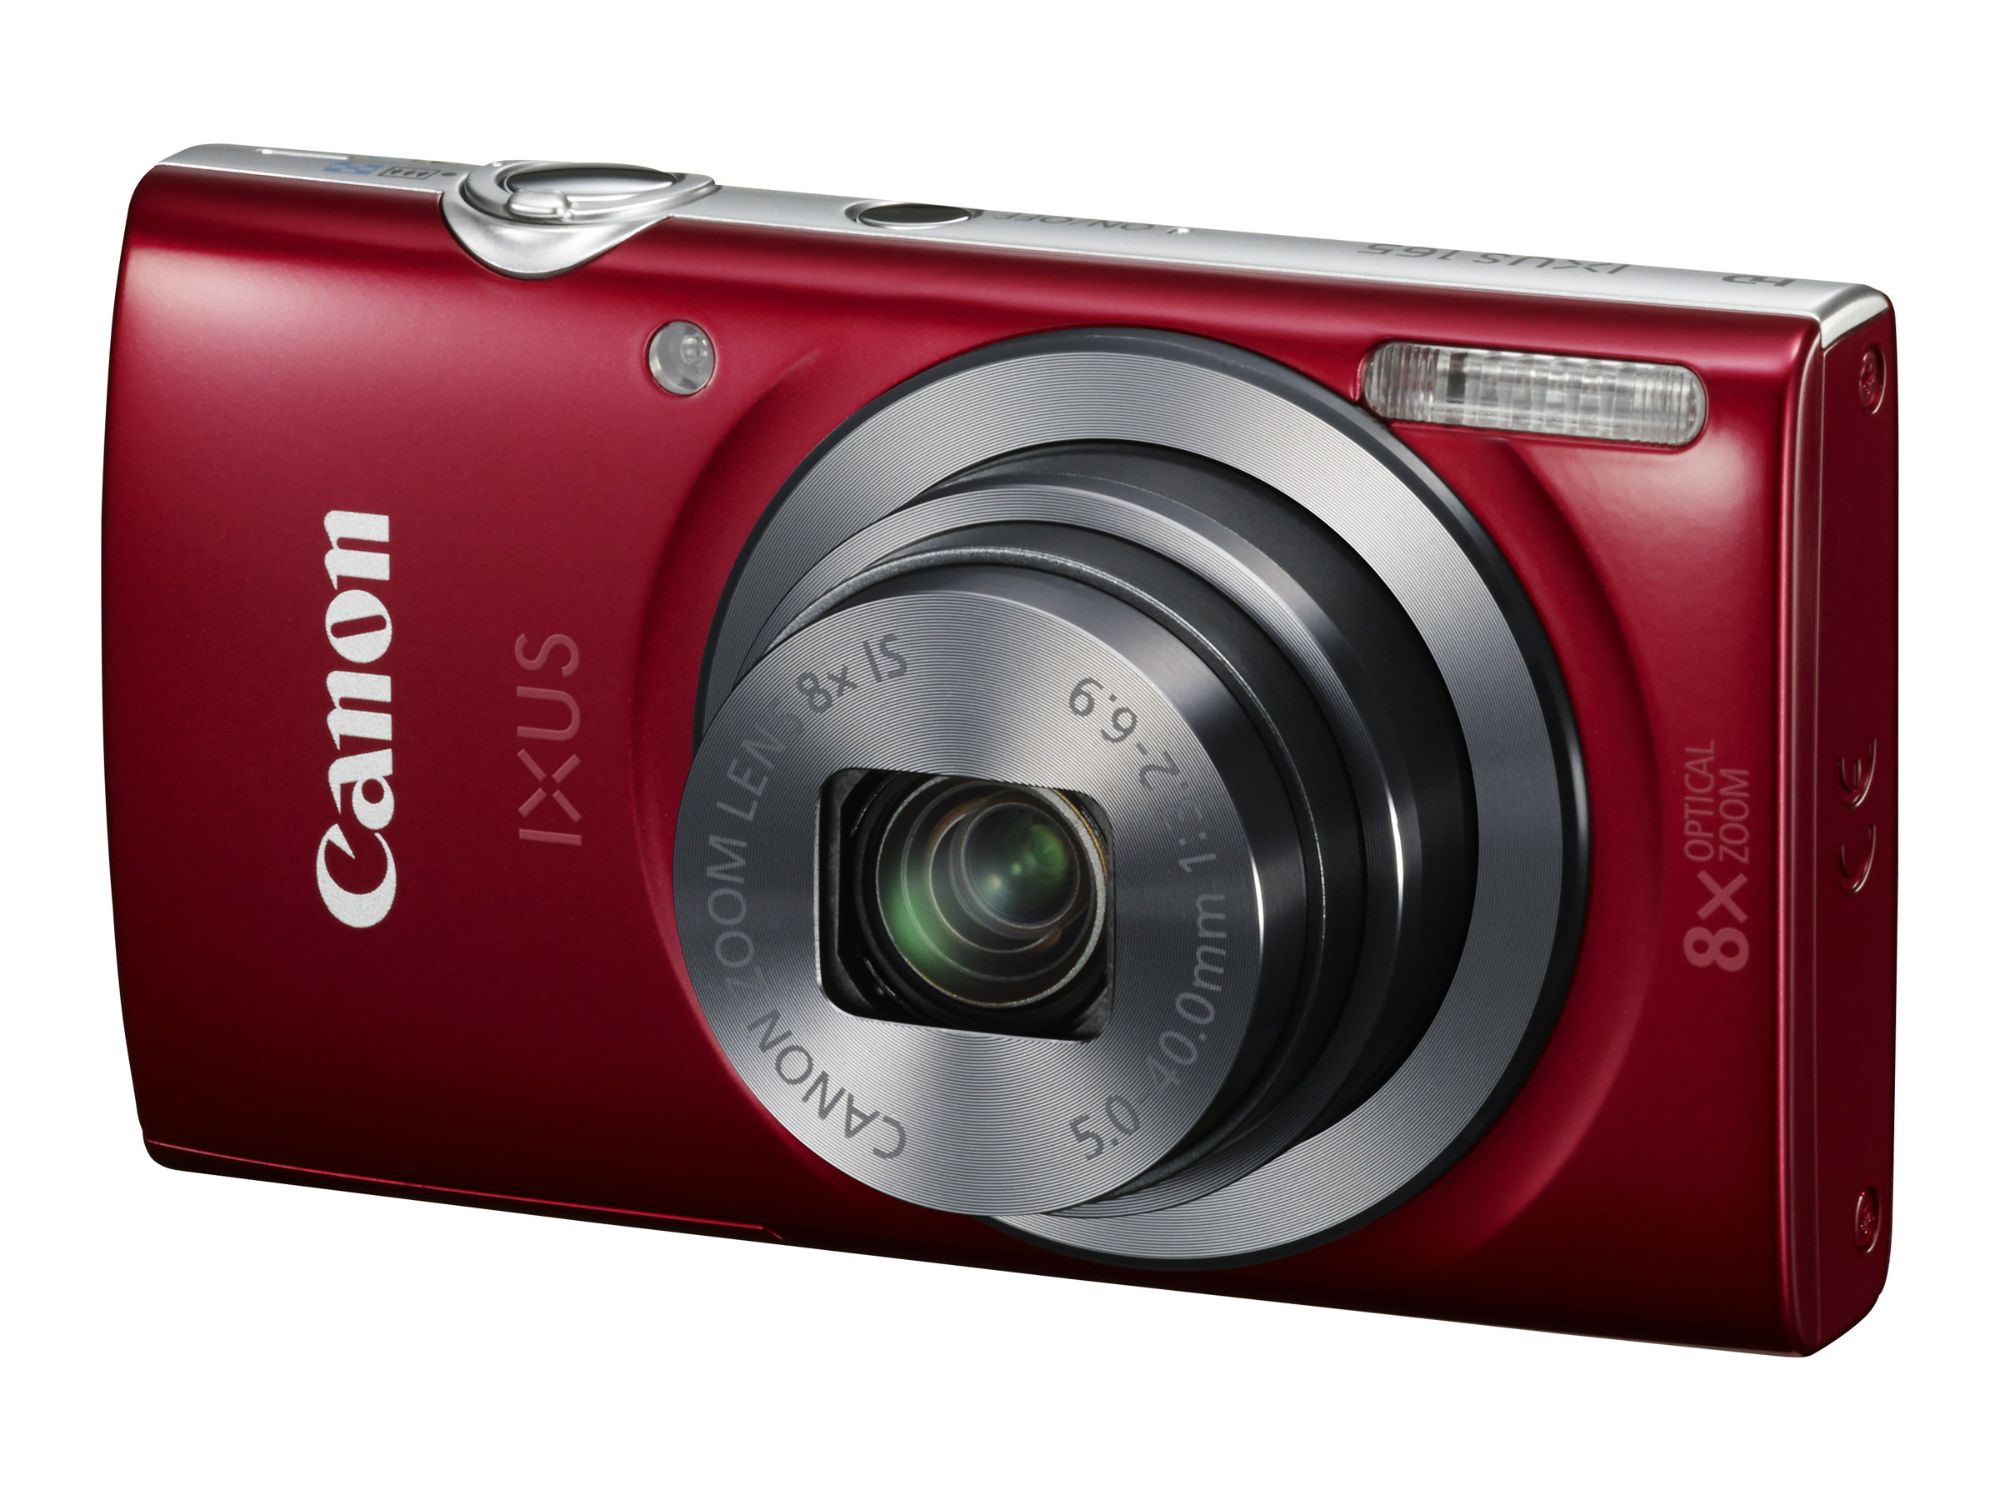 Appareil photo Compact Canon IXUS 165 compact - 20.0 MP - 720 p - 8x zoom optique - rouge | Rakuten